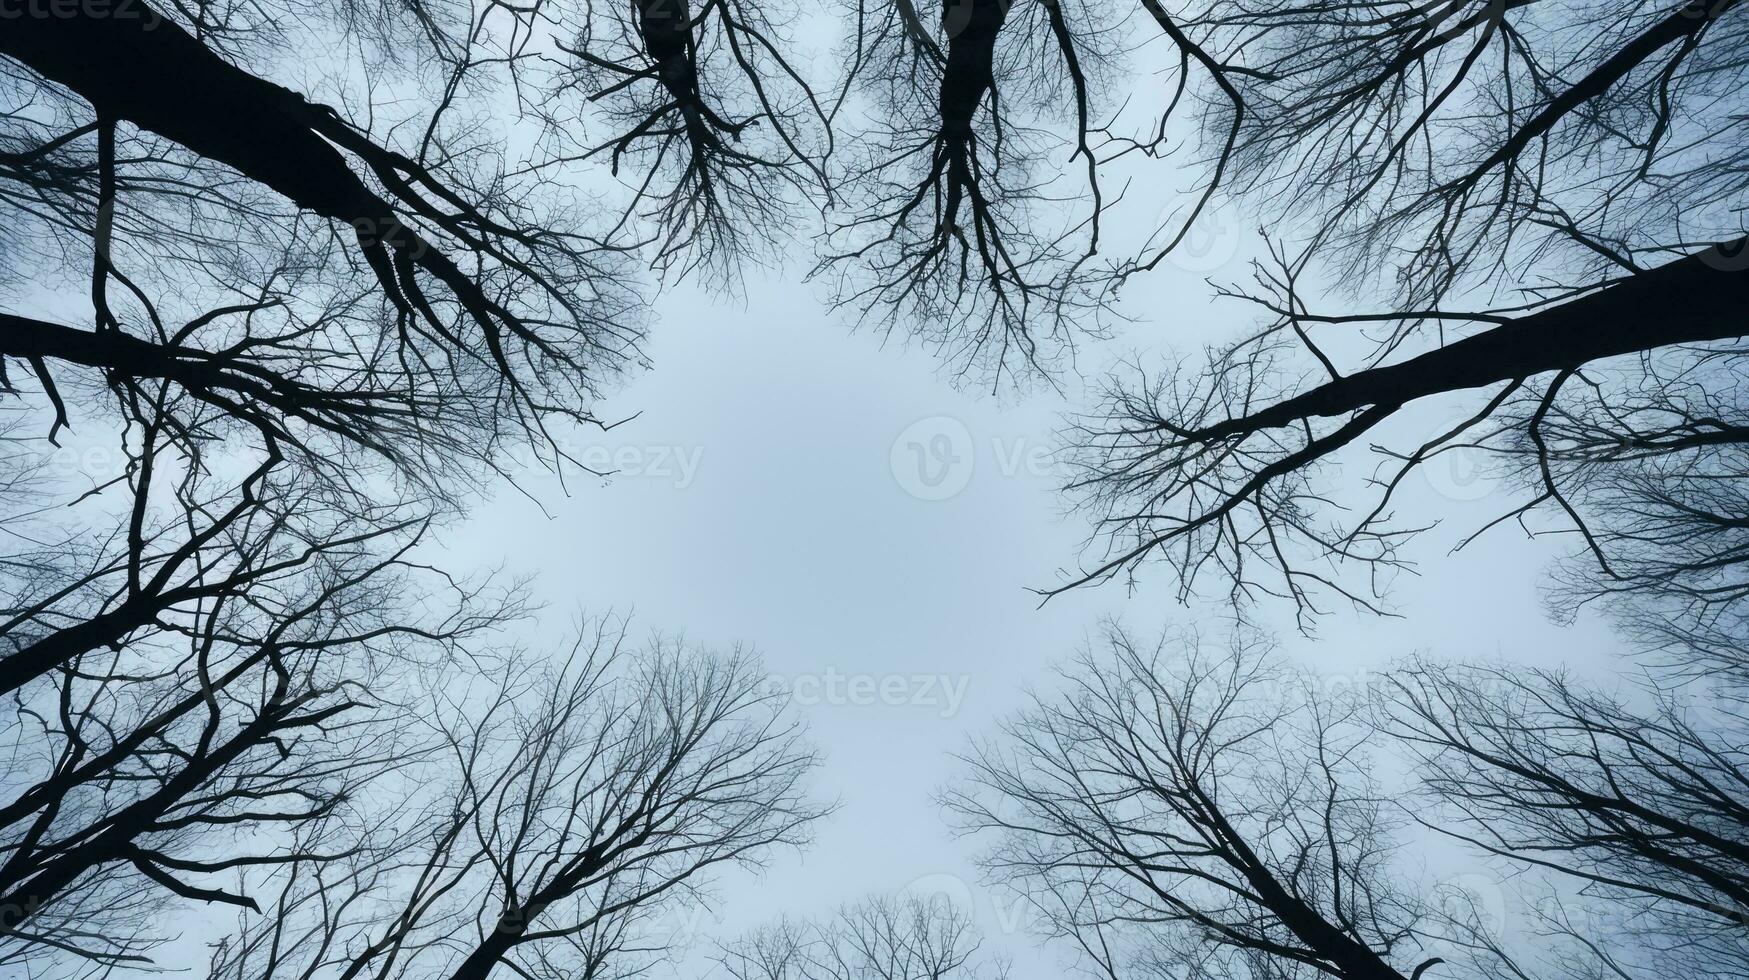 vinter- skog träd grenar mönster mot de himmel i en botten se foto